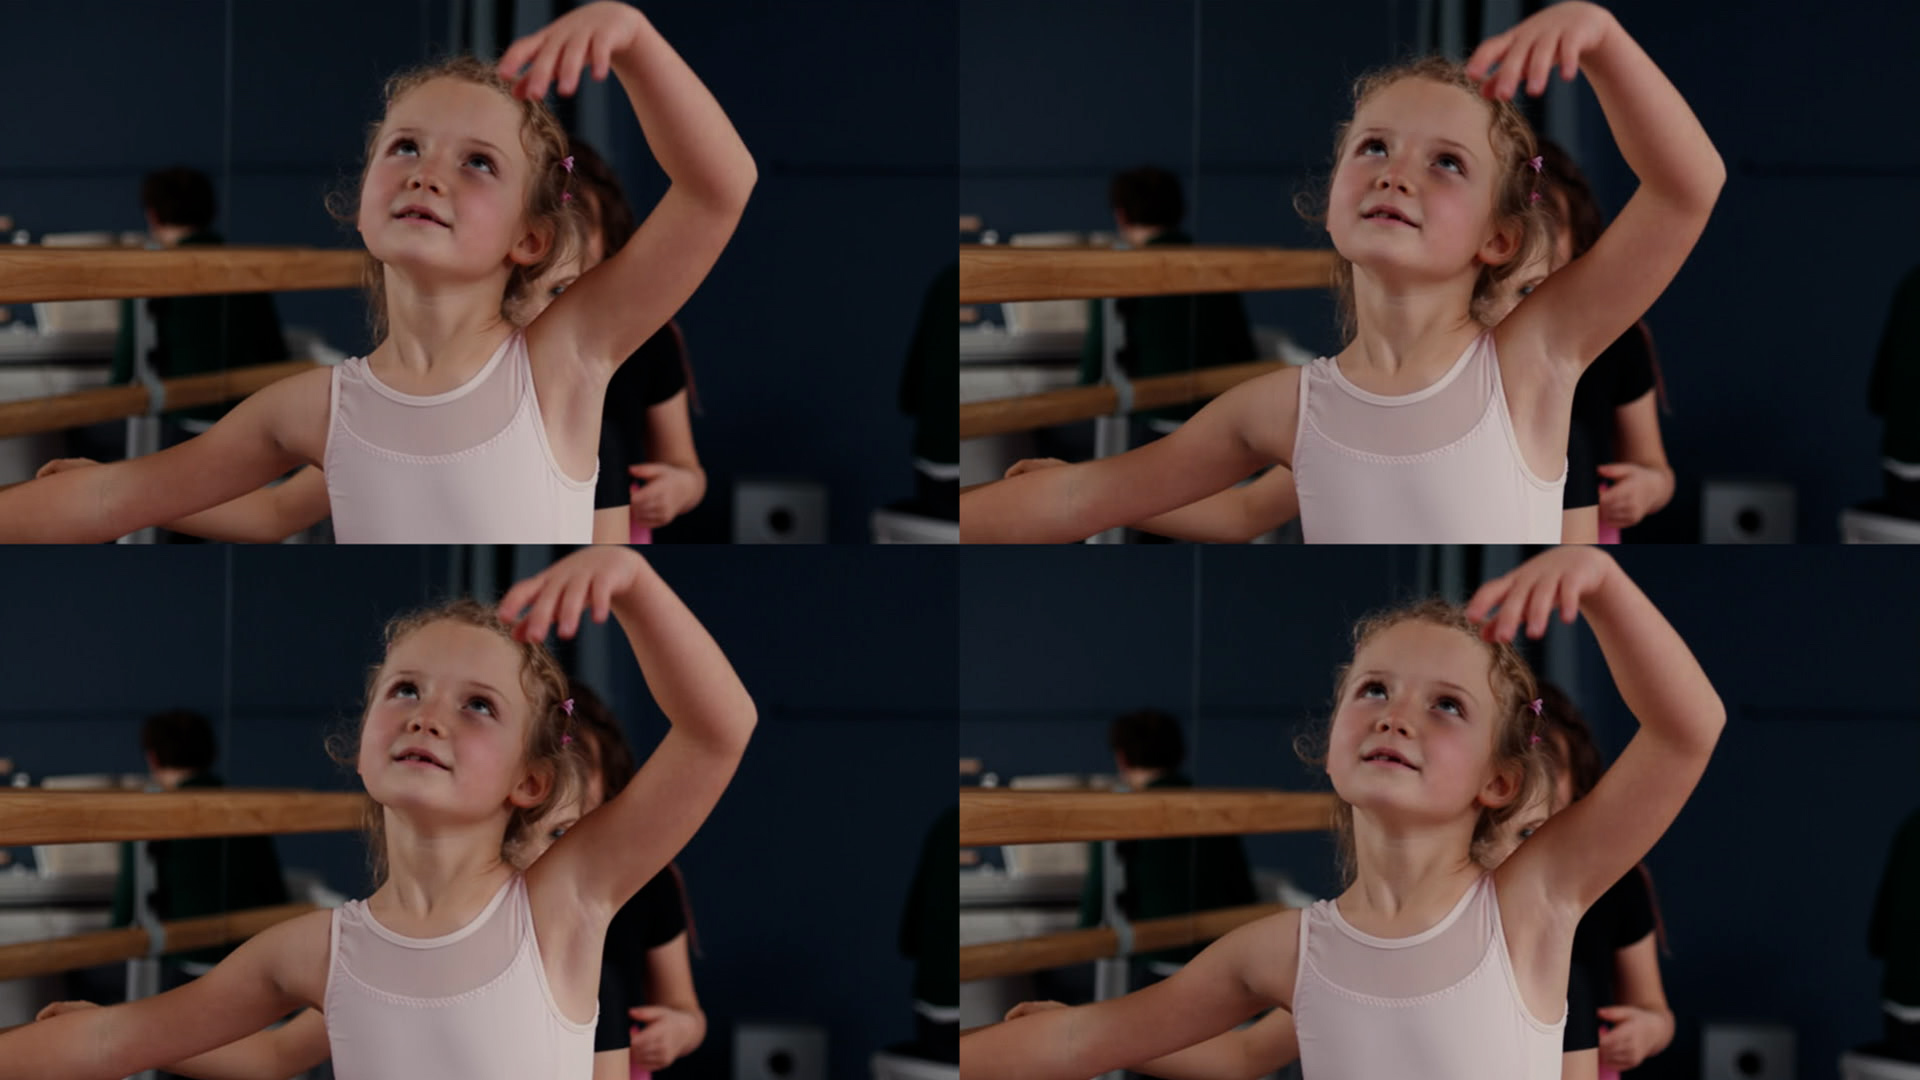 foursome split screen young girl dancing ballet